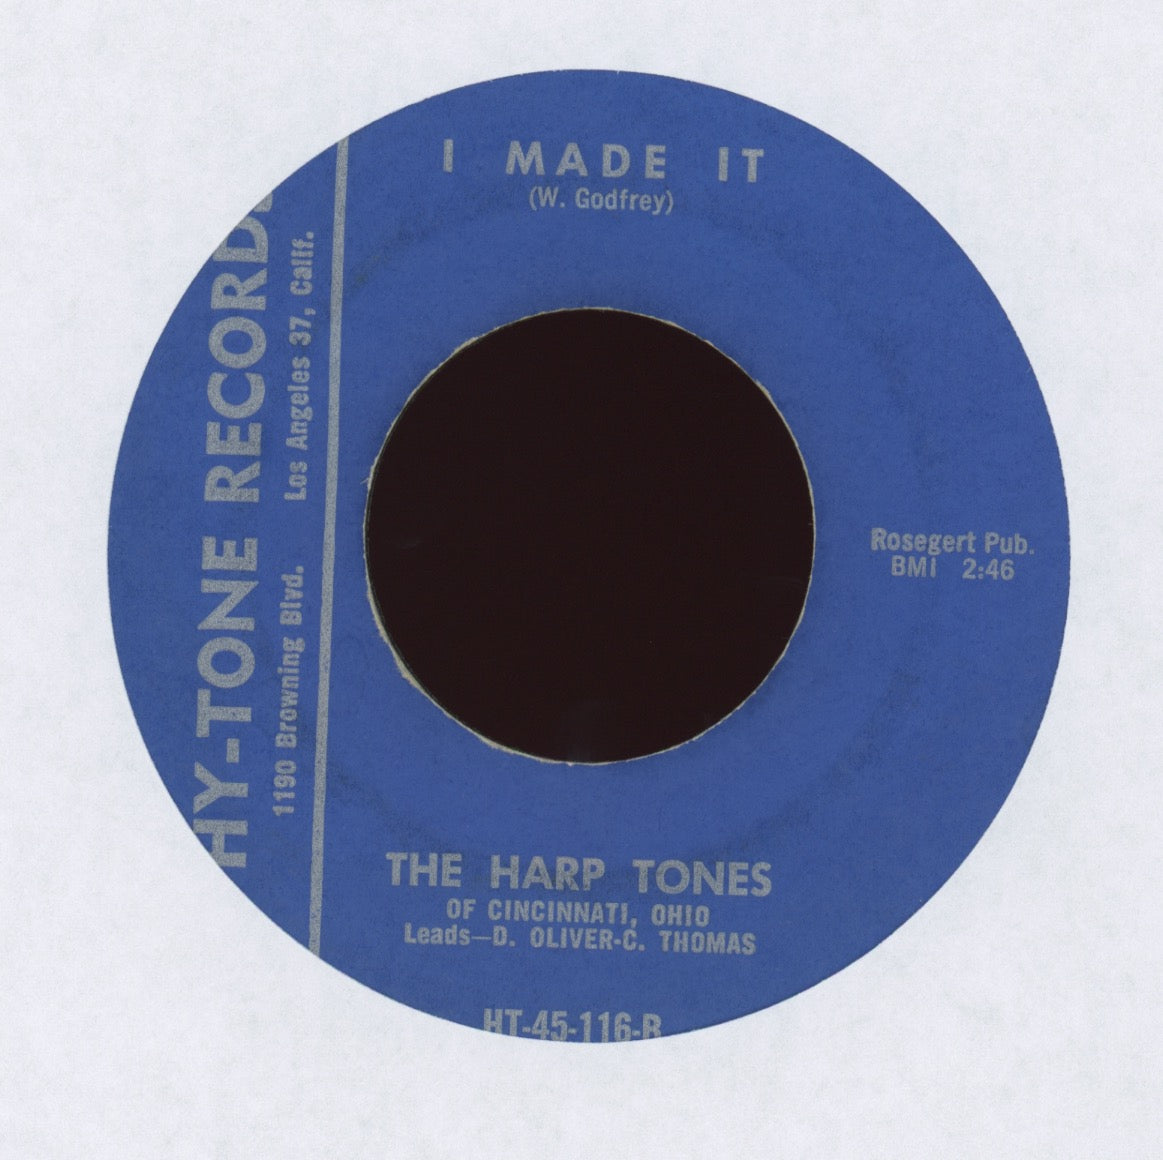 The Harp-Tones Of Cincinnati, Ohio - I Made It on Hy-Tone